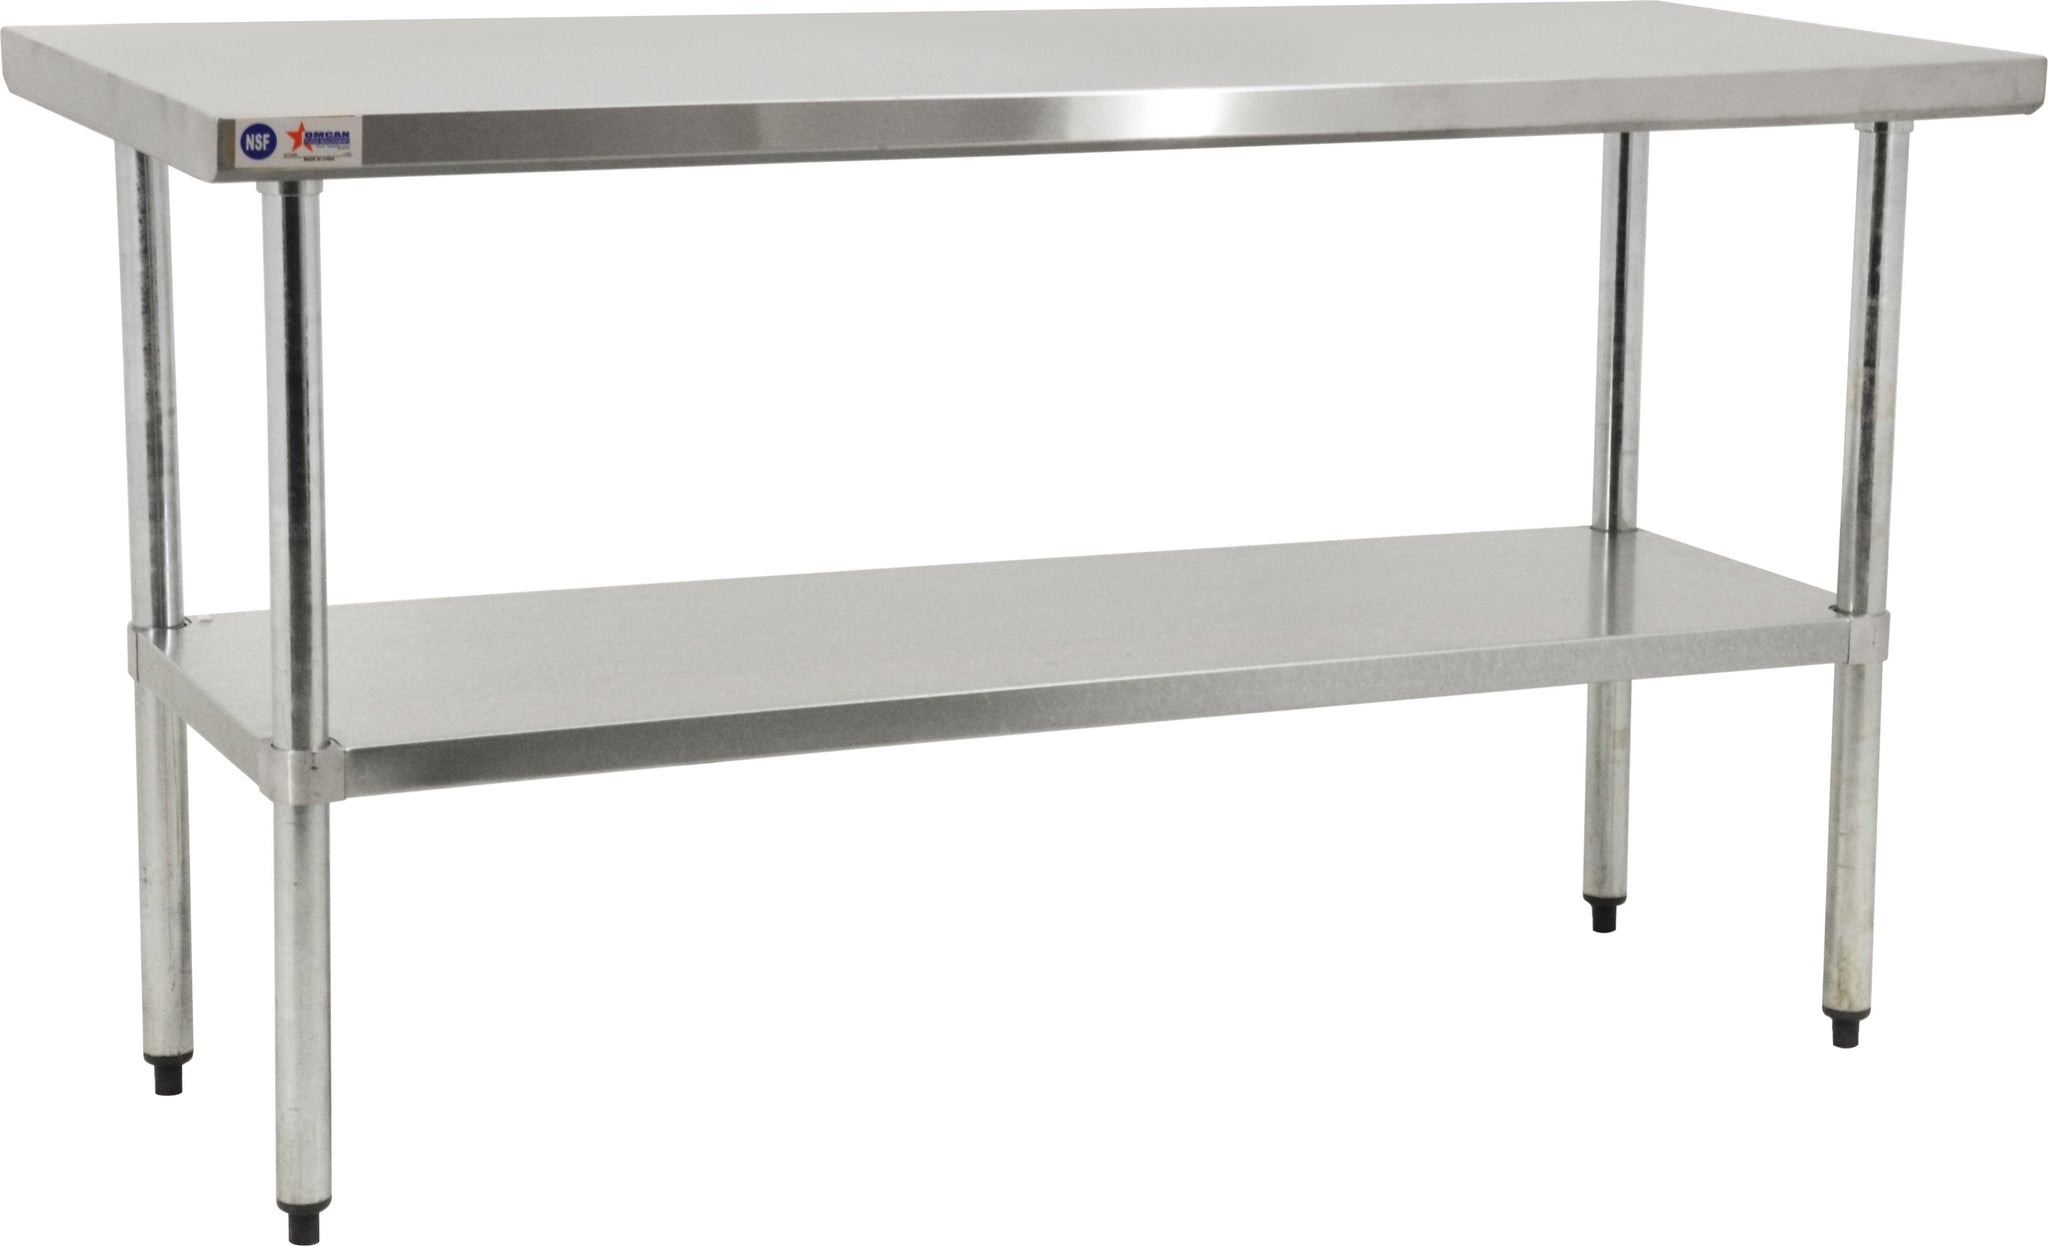 Omcan - 30” x 84” Elite Stainless Steel Work Table - 20434